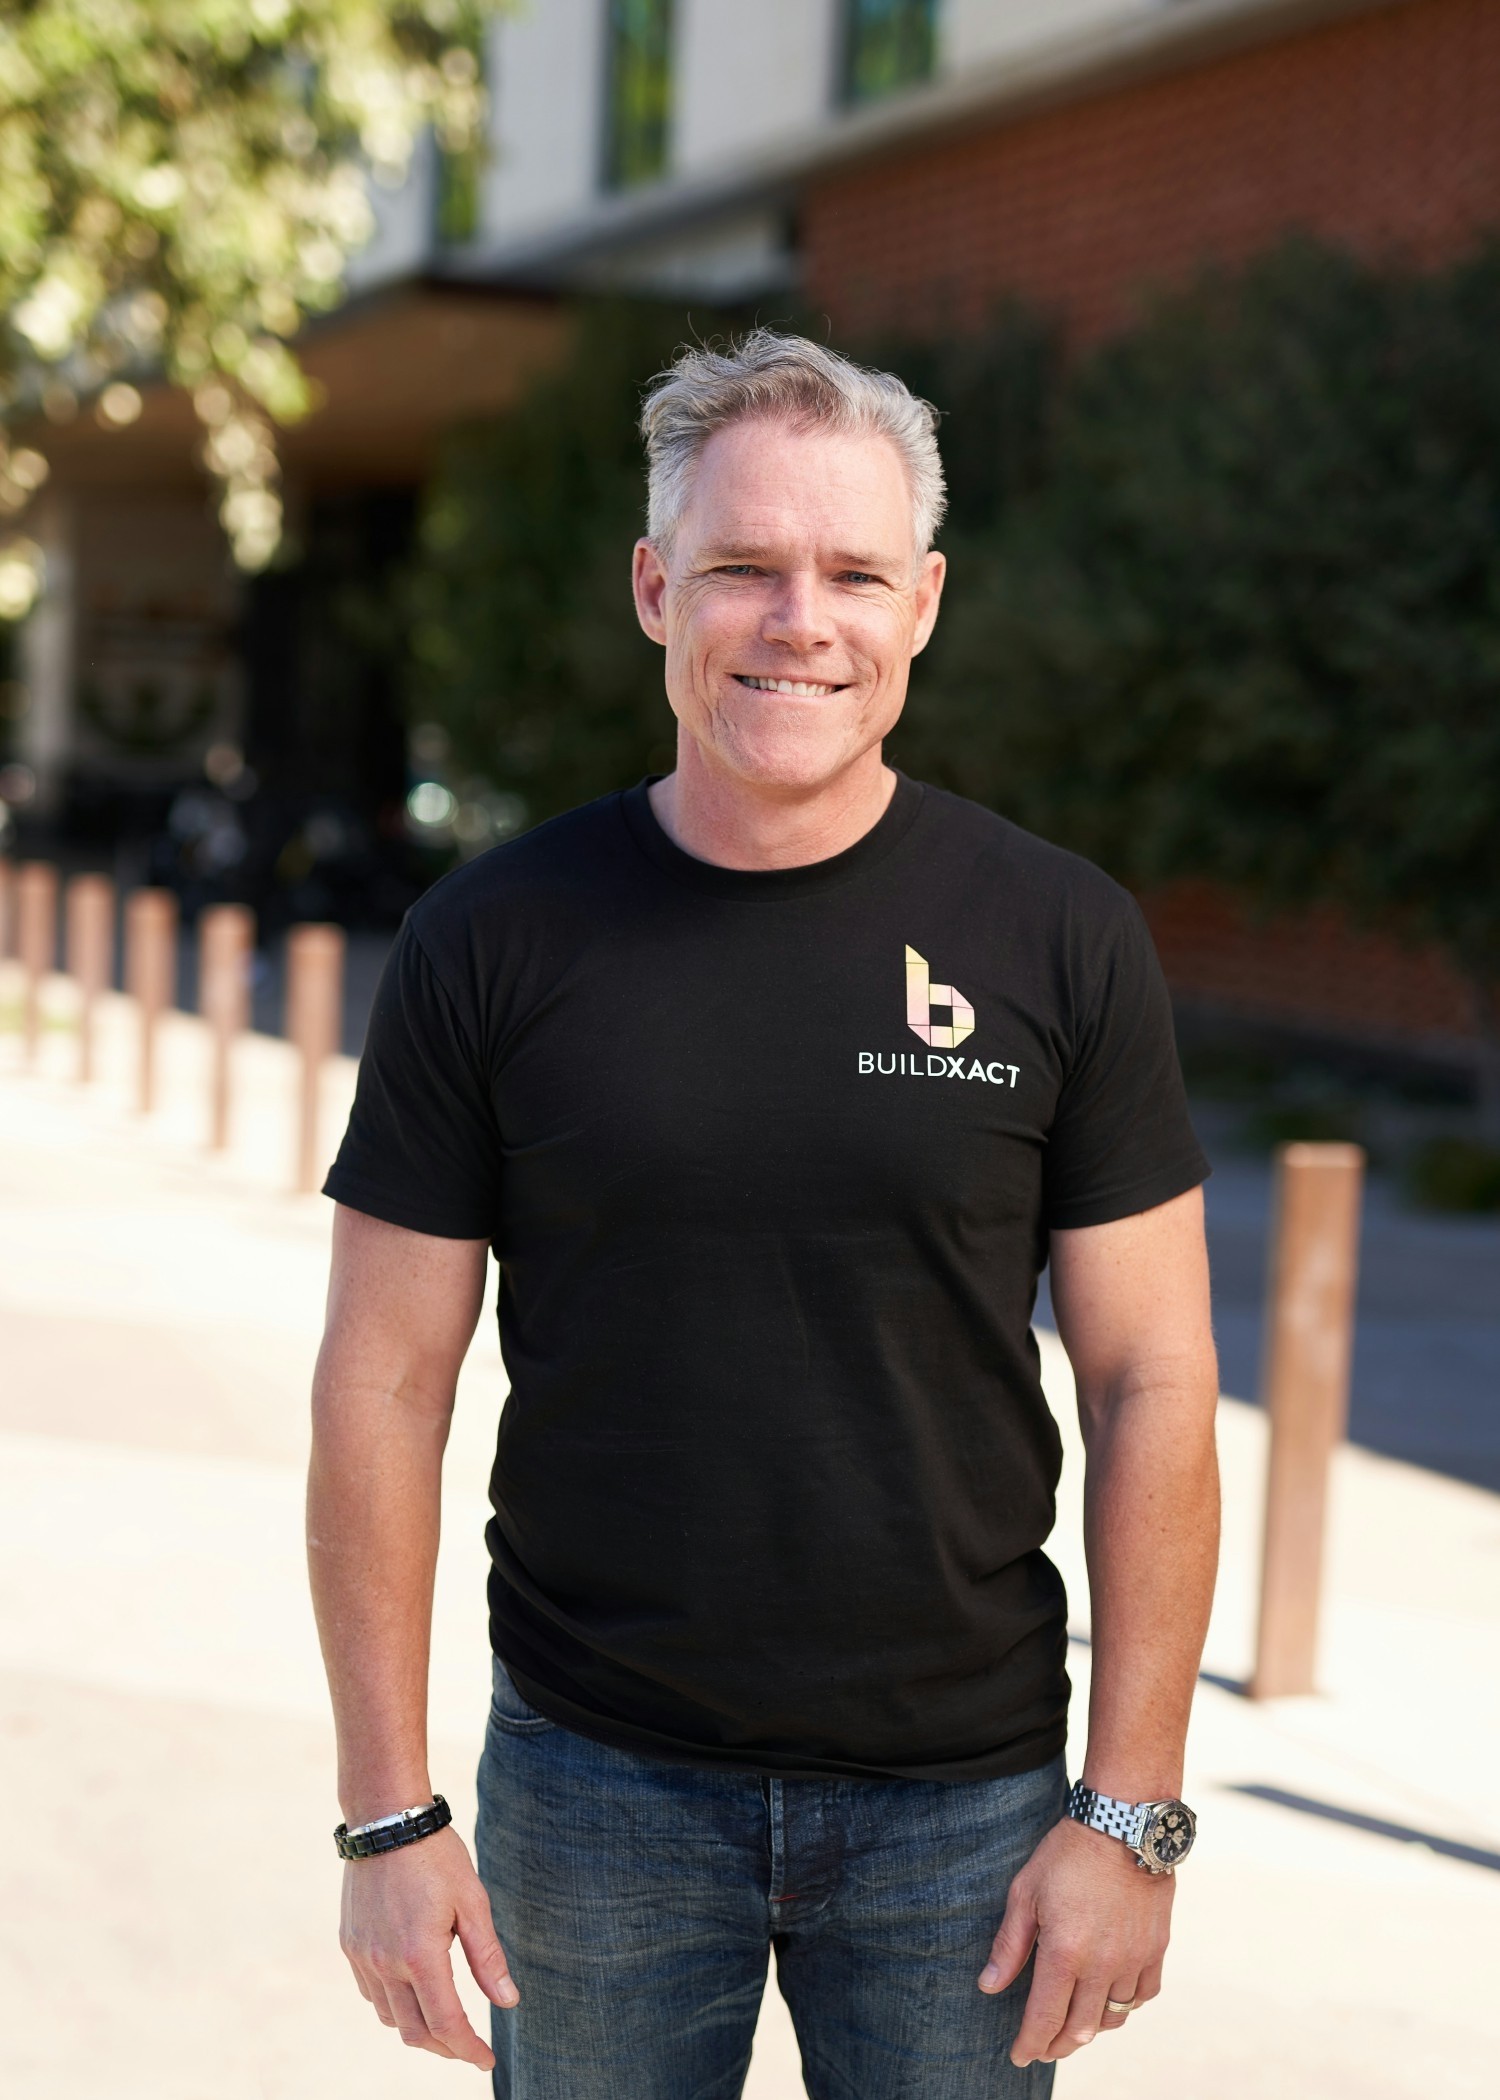 CEO of Buildxact, David Murray